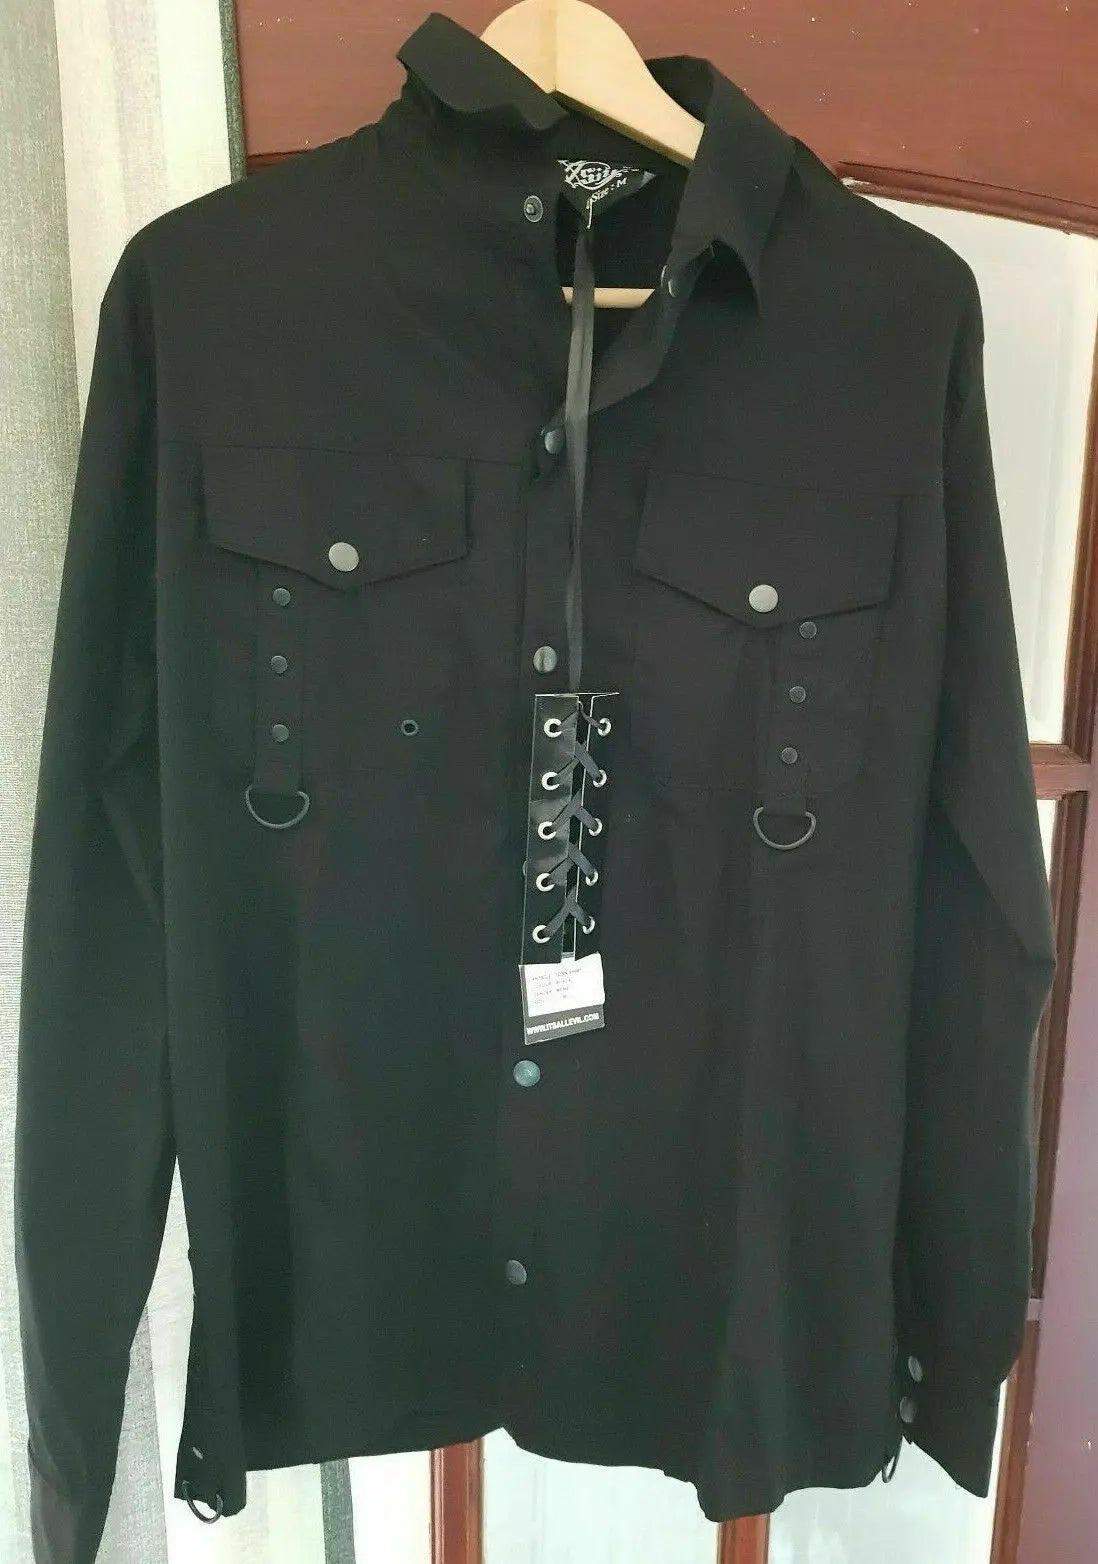 Vixxsin Torn Men's BLCK Short Sleeve Goth Alternative Black Shirt D RINGS.SIZE M Vixxsin